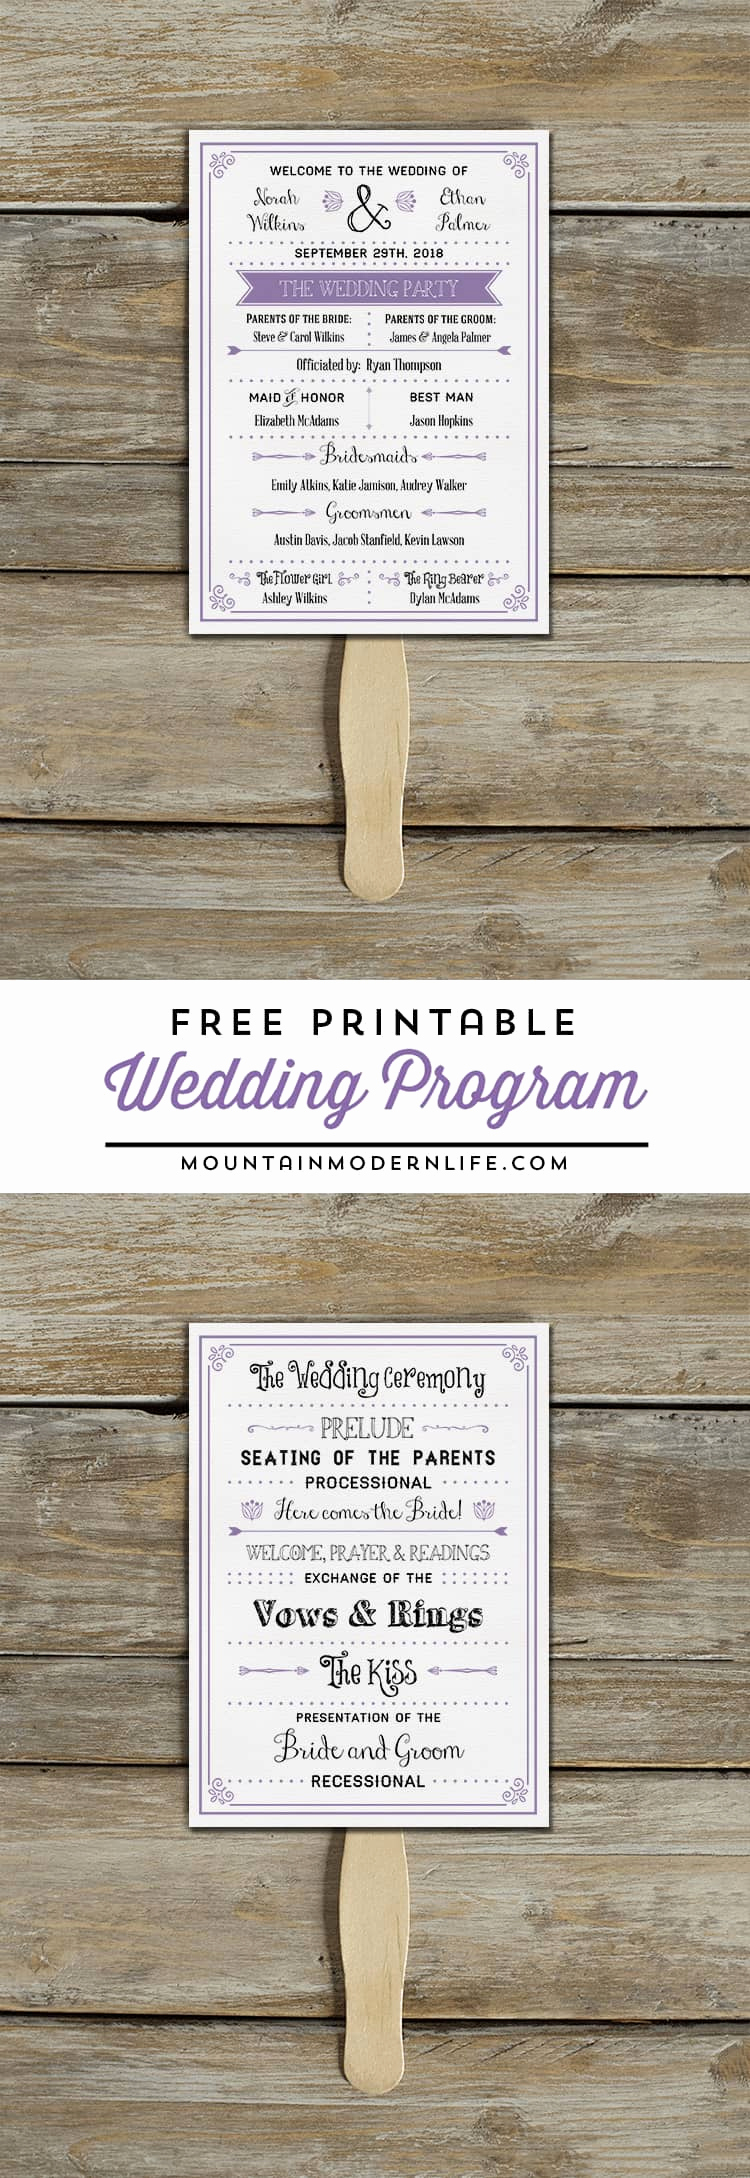 Wedding Program Fan Template Awesome Free Printable Wedding Program